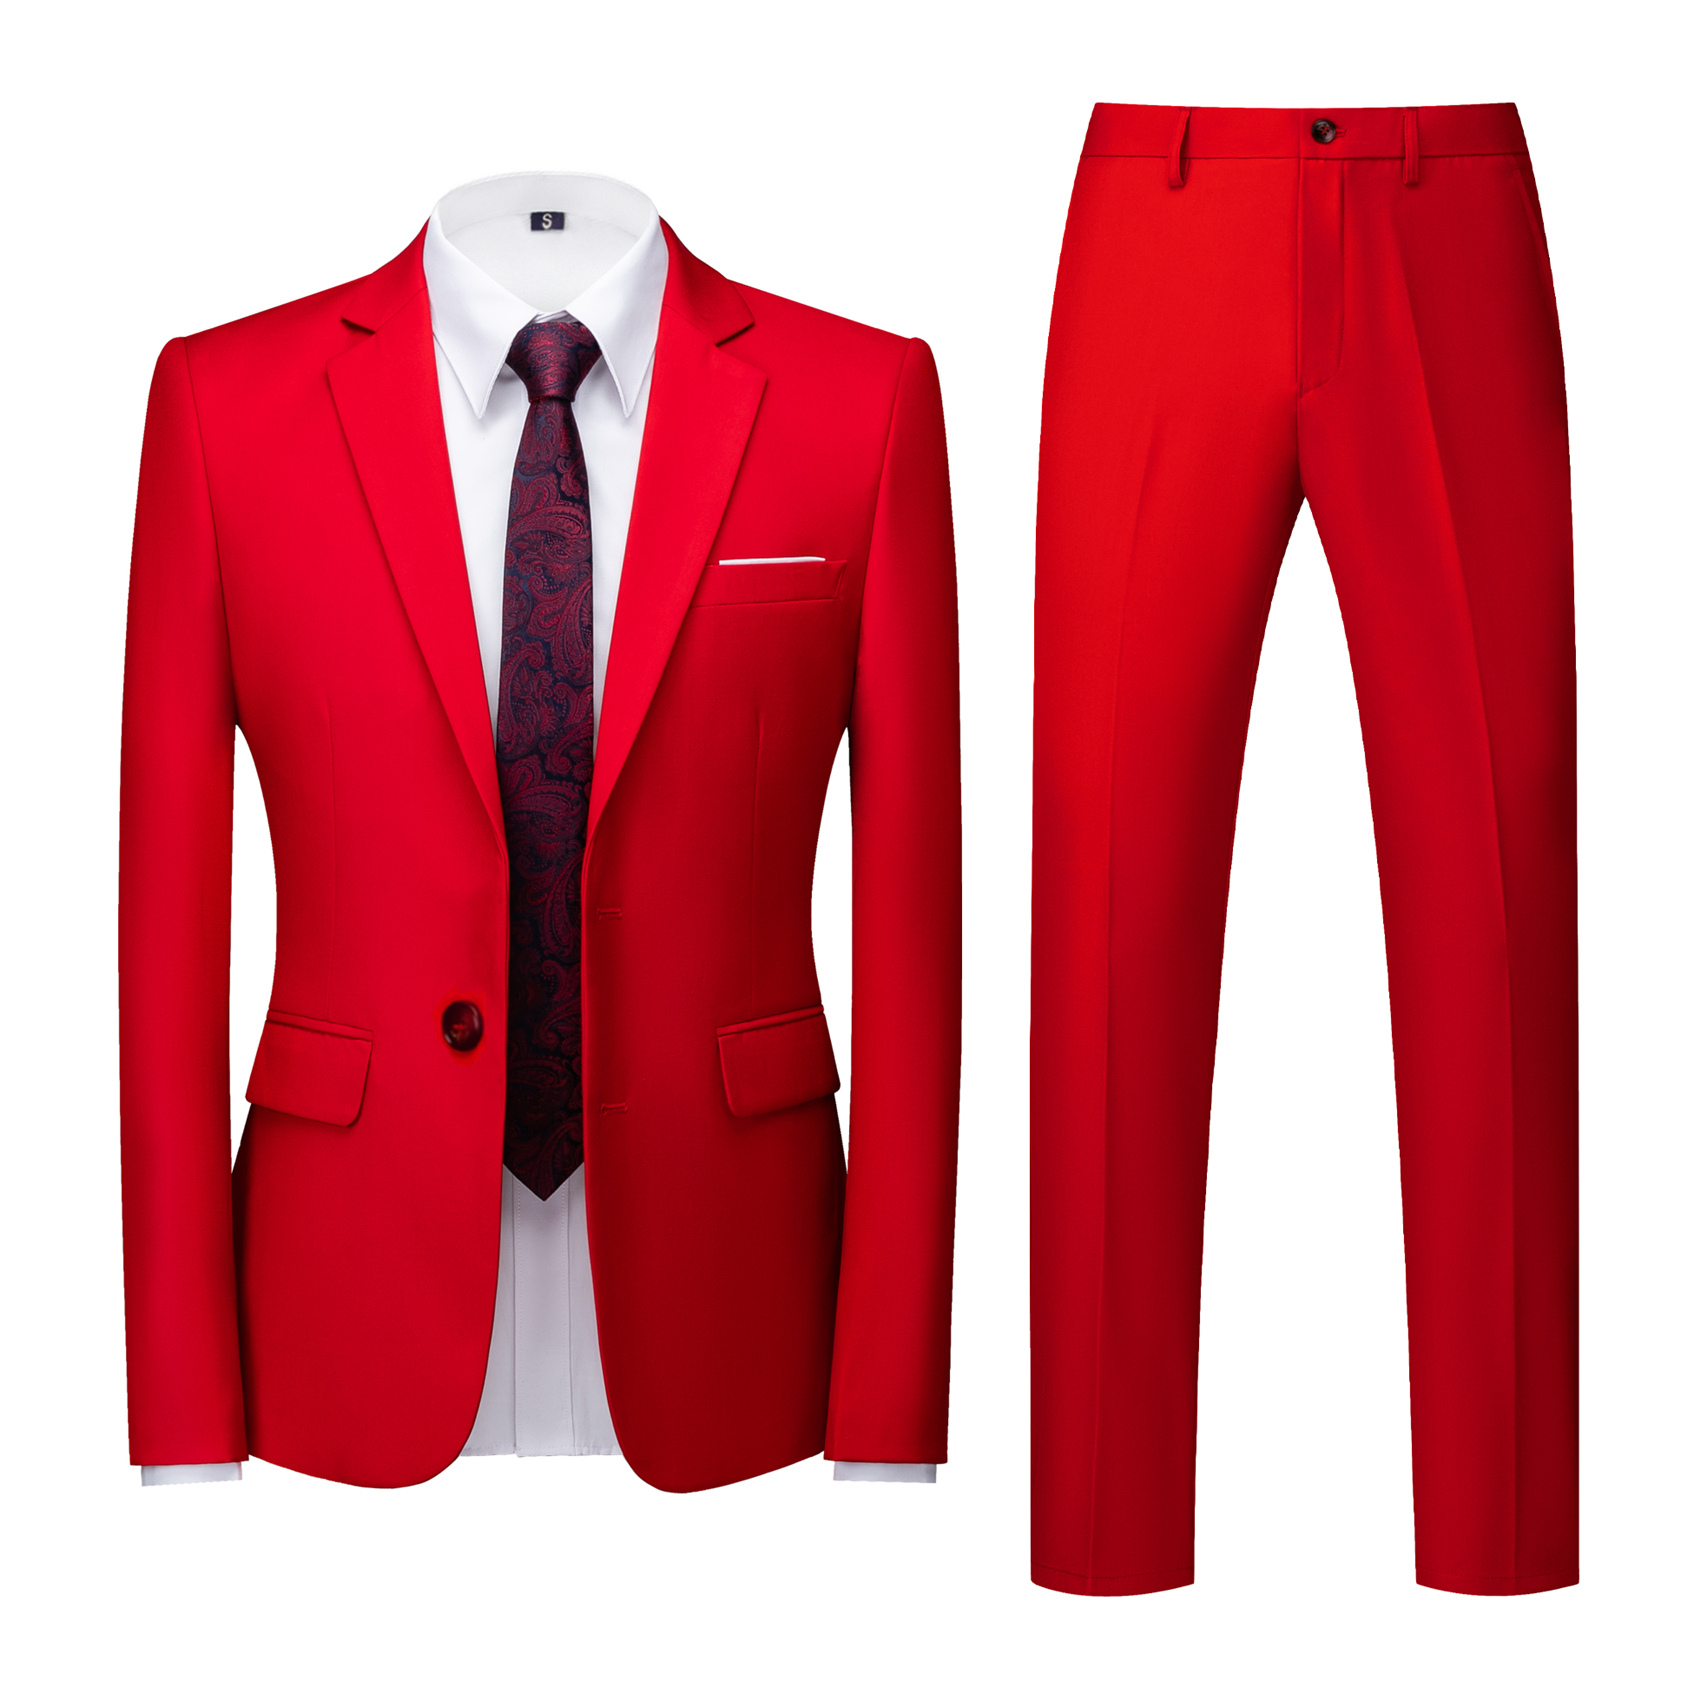 3 Piece Red Suit for Men, Slim Fit (1 Button)